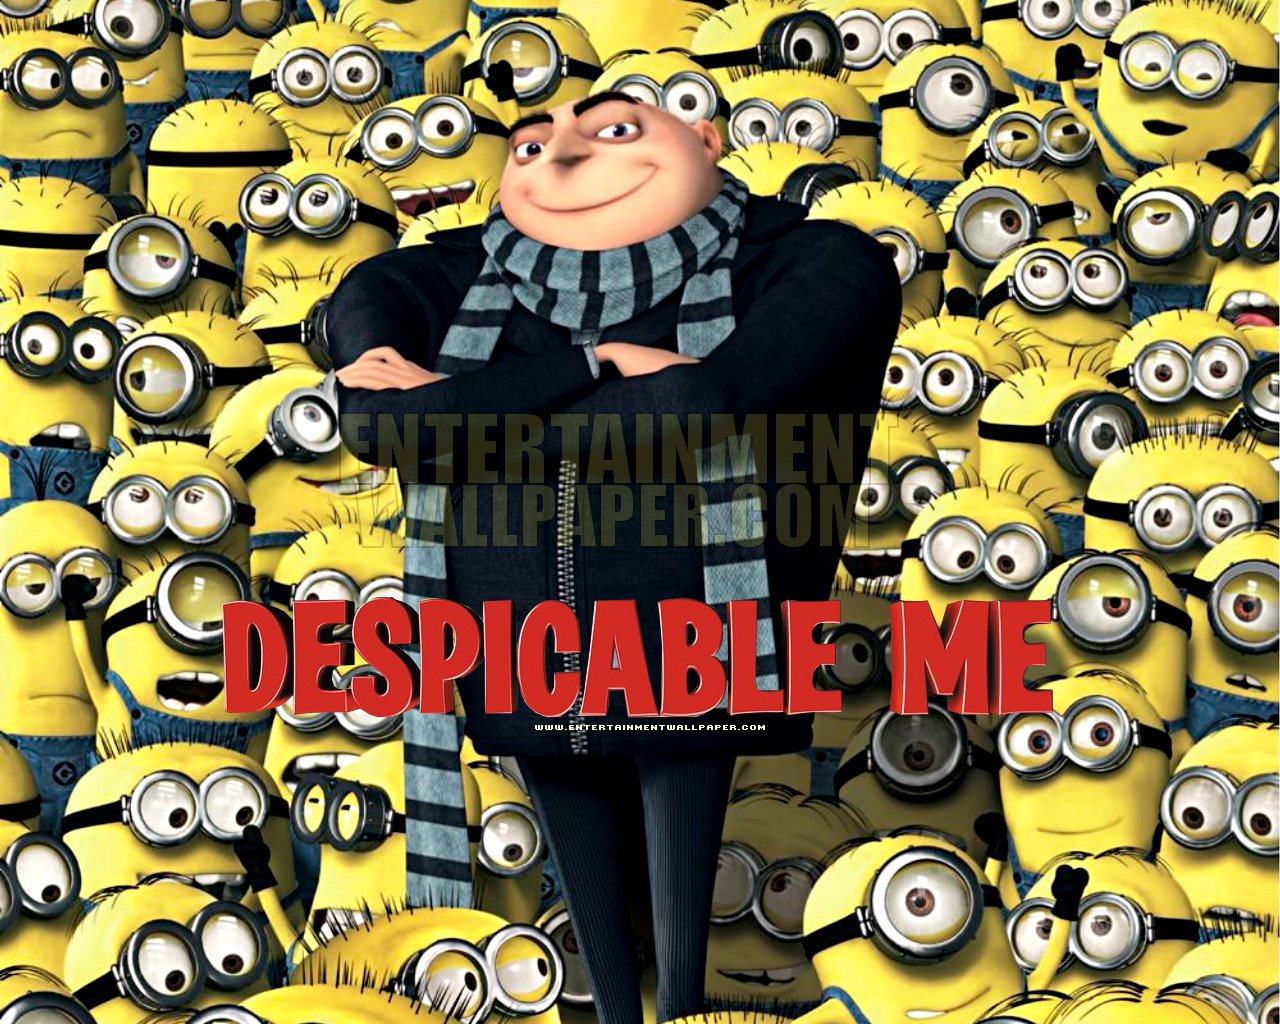 Despicable Me - Despicable Me 2010 Movie Poster - HD Wallpaper 